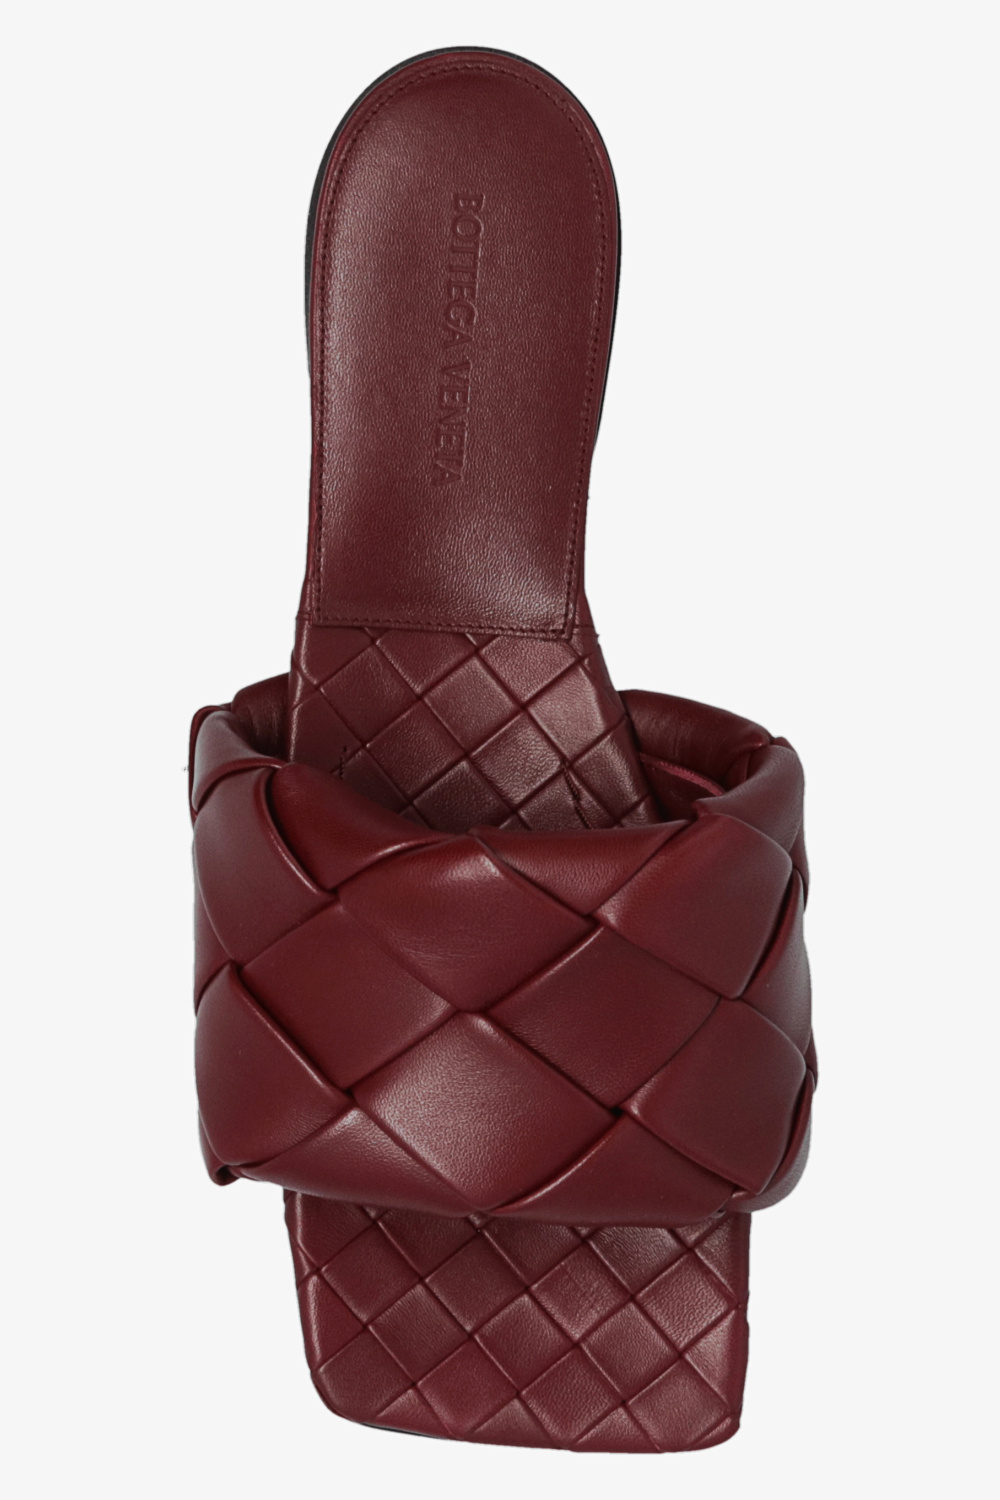 Bottega Veneta ‘Lido’ leather slides